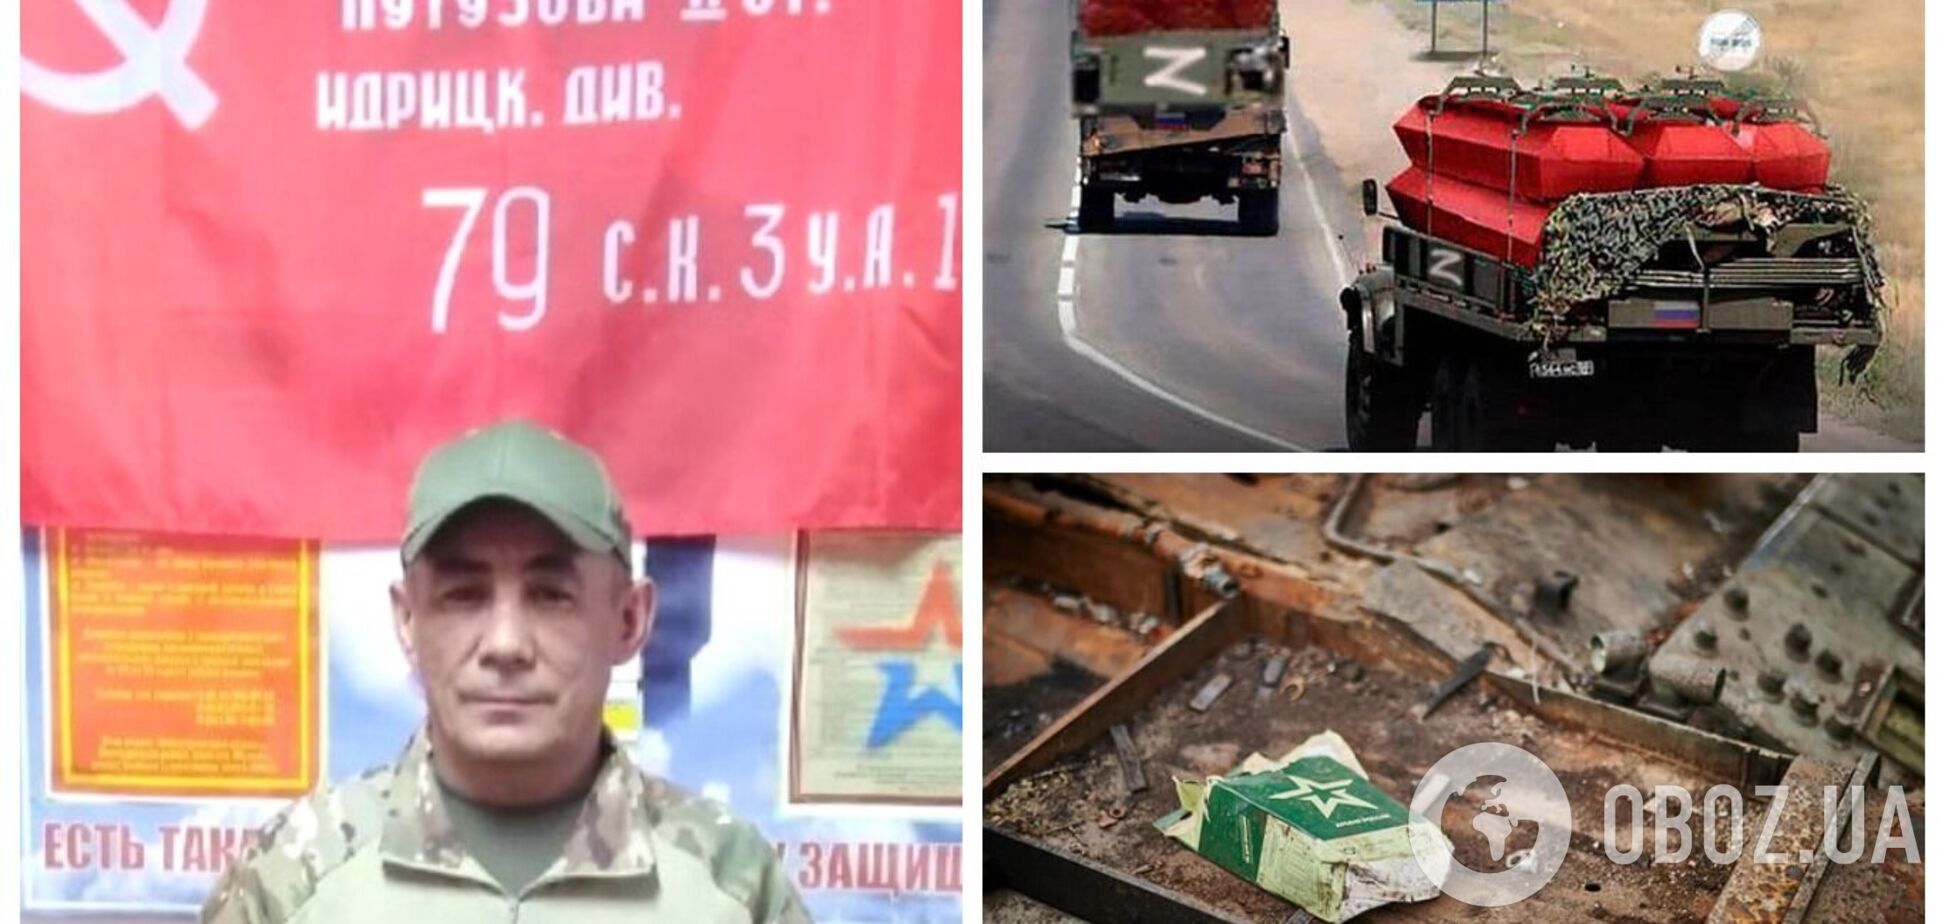 Позировал на фоне молота с серпом: в Украине ликвидировали оккупанта Харунова из Башкирии. Фото